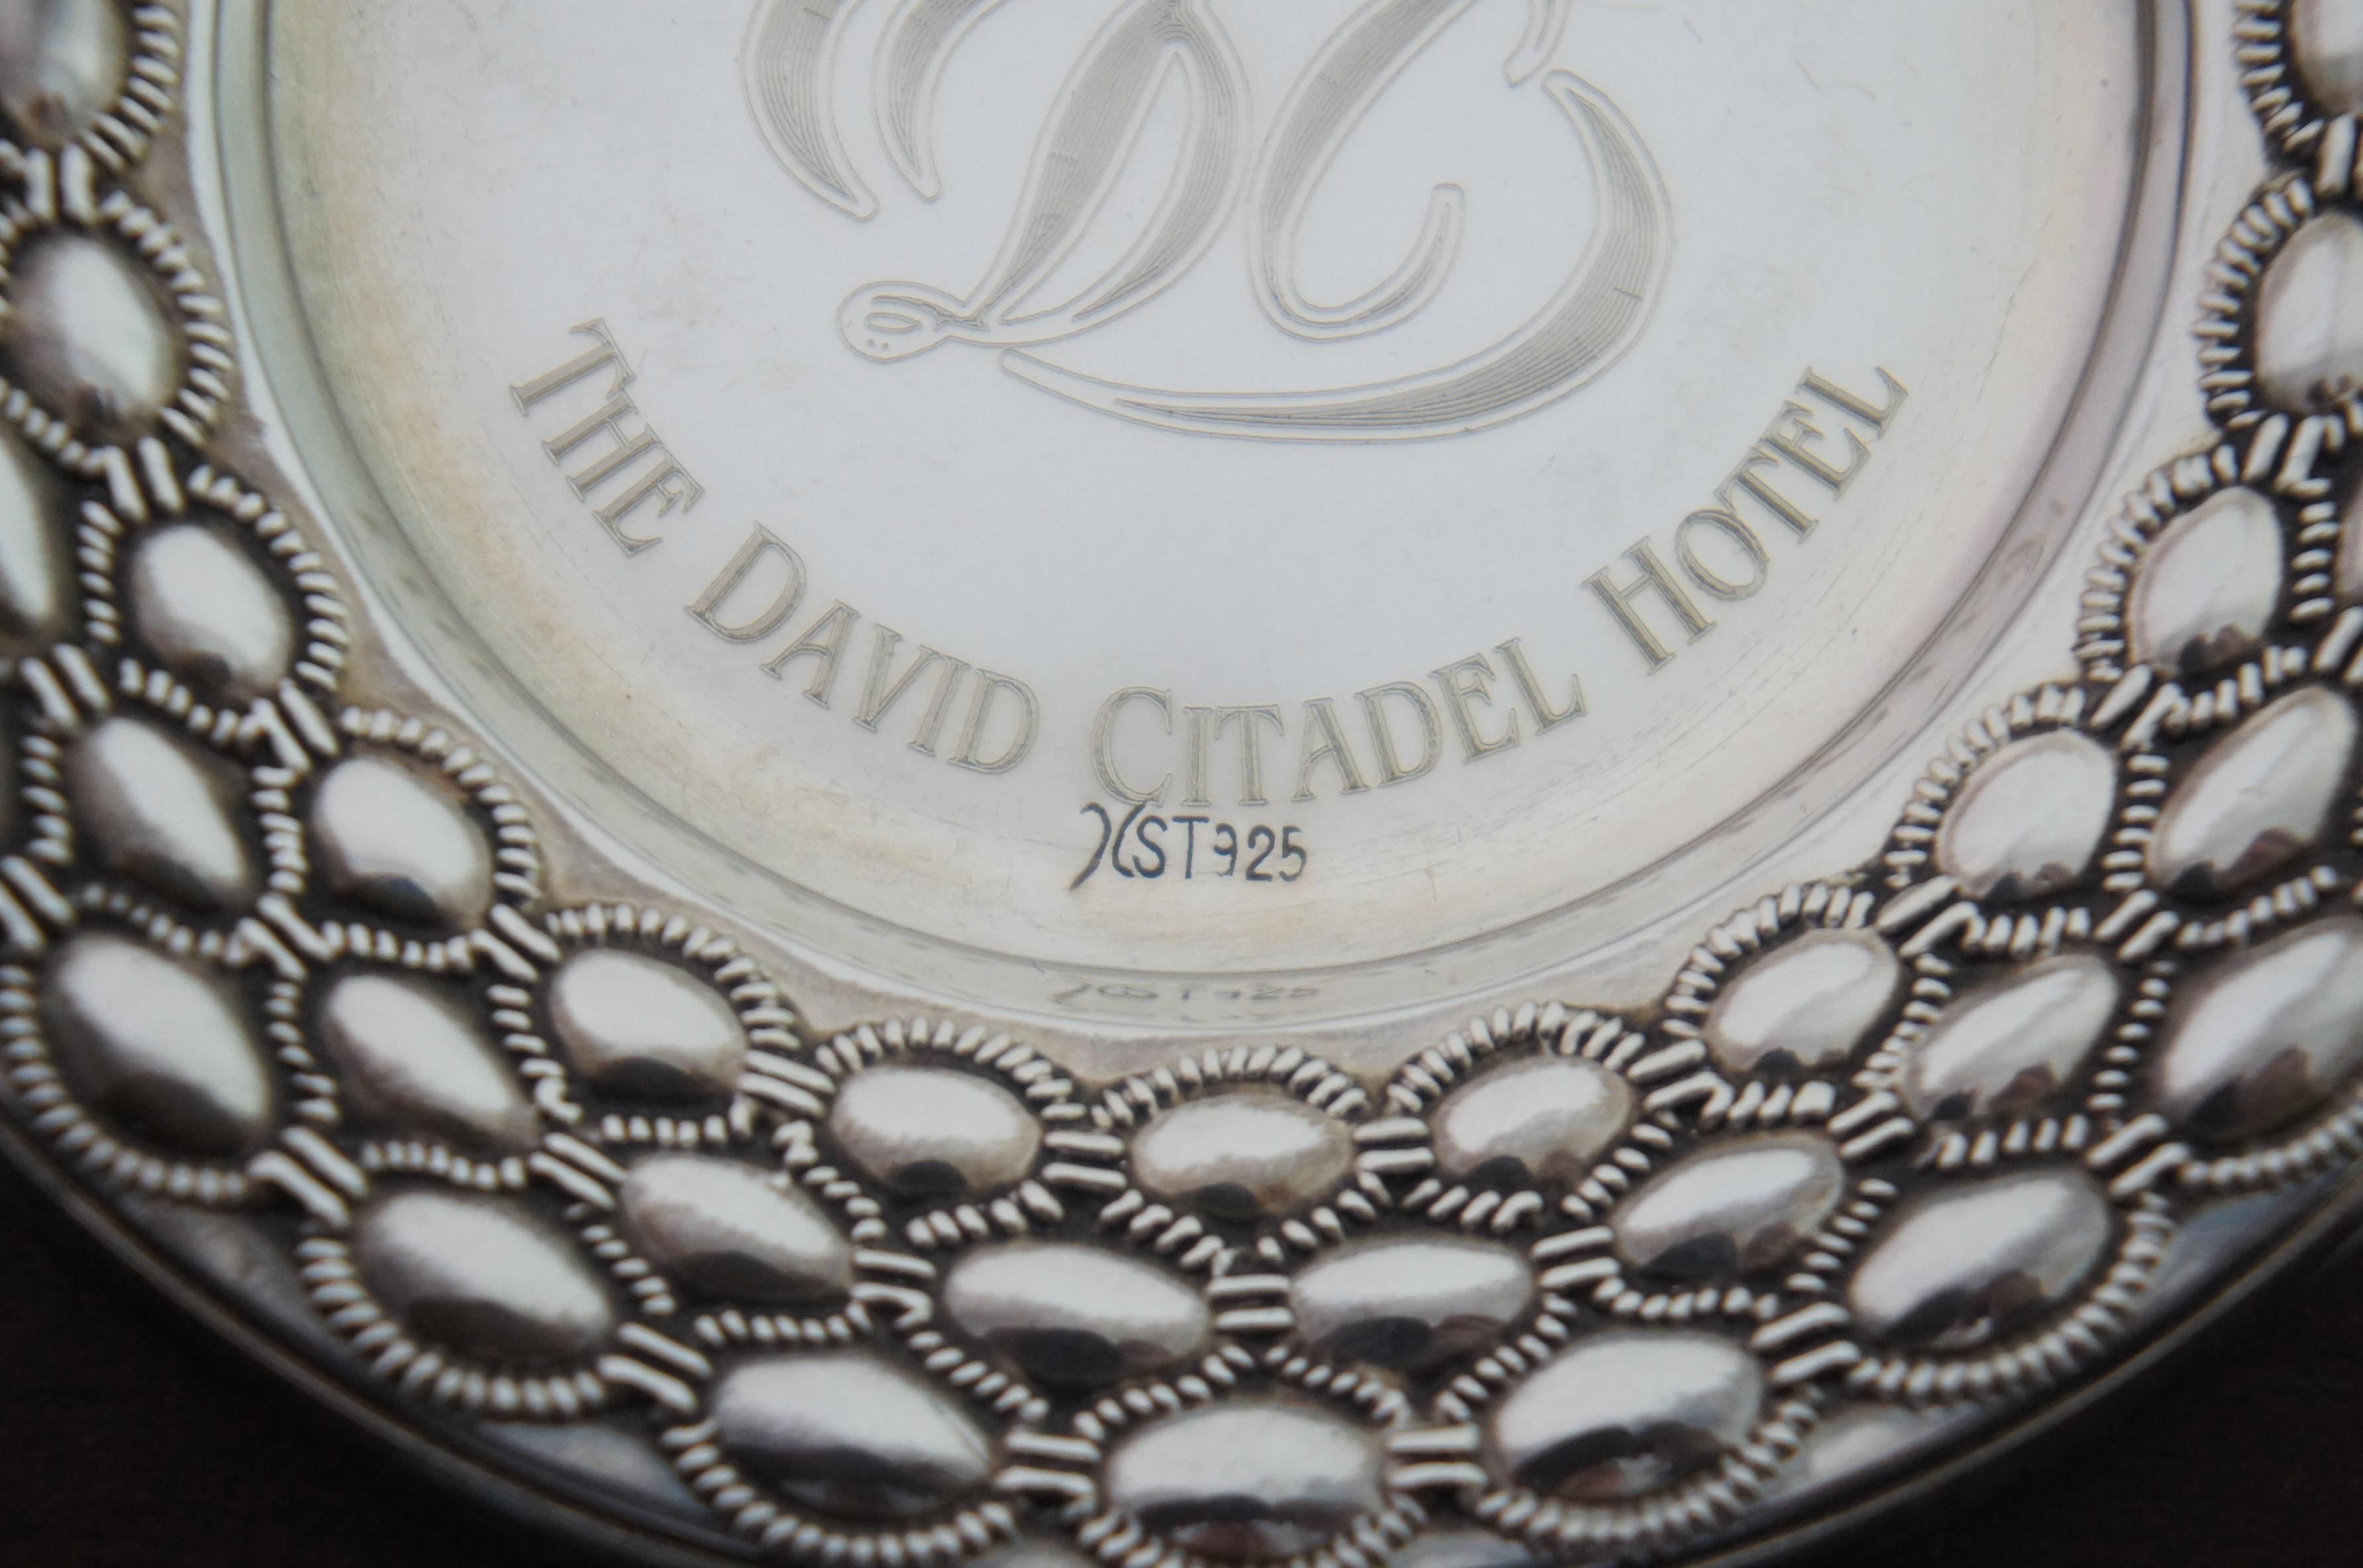 Seltener David Citadel Hotel Sterlingsilber 925 Weinuntersetzer-Teller 31g im Angebot 1